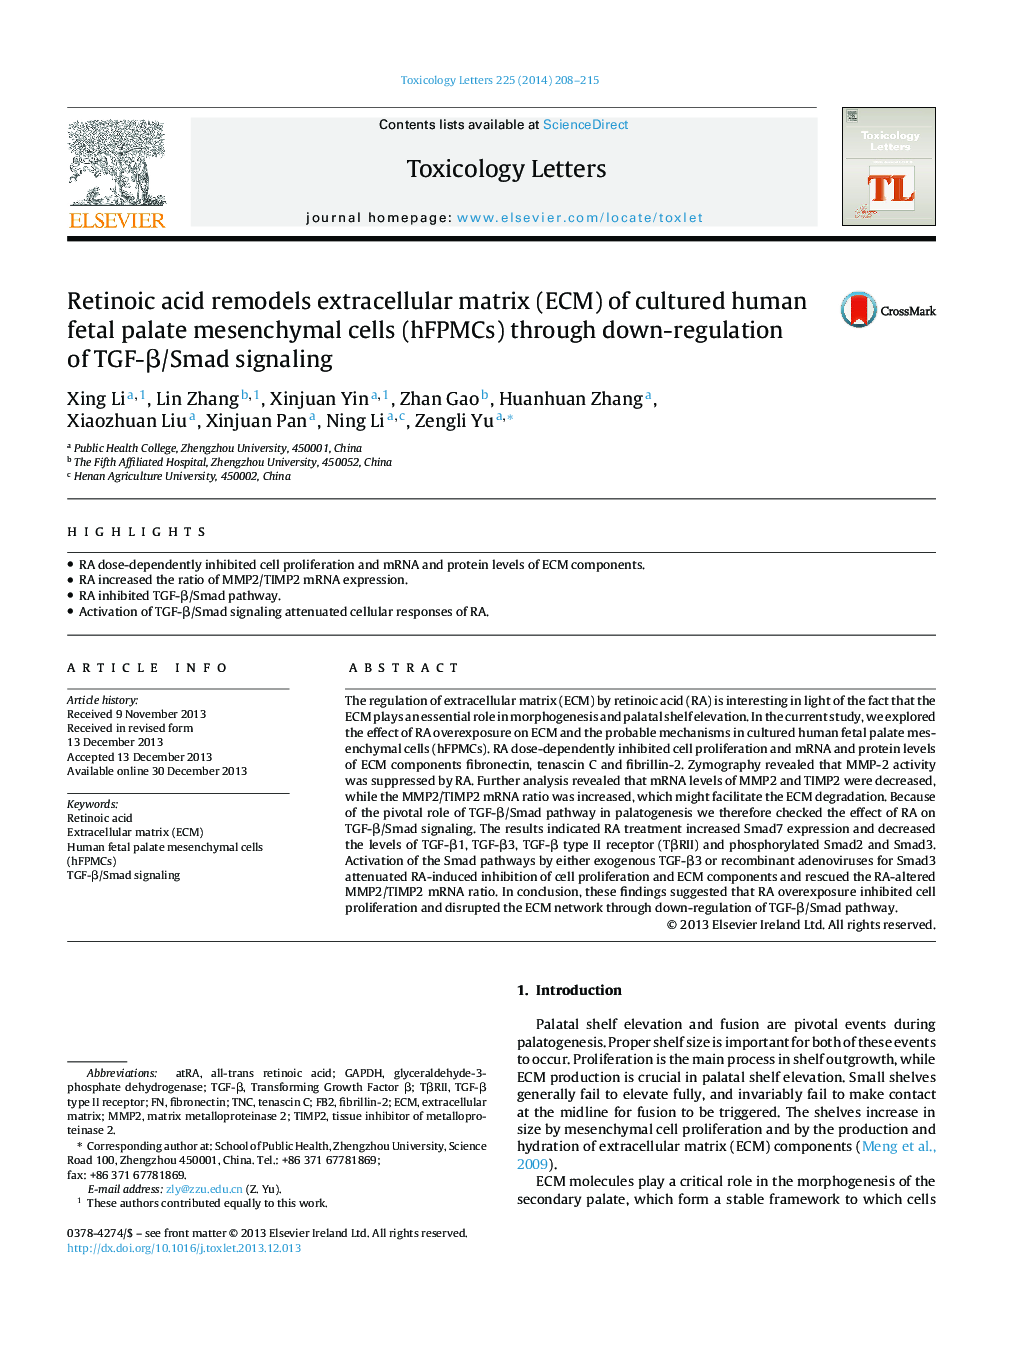 Retinoic acid remodels extracellular matrix (ECM) of cultured human fetal palate mesenchymal cells (hFPMCs) through down-regulation of TGF-β/Smad signaling